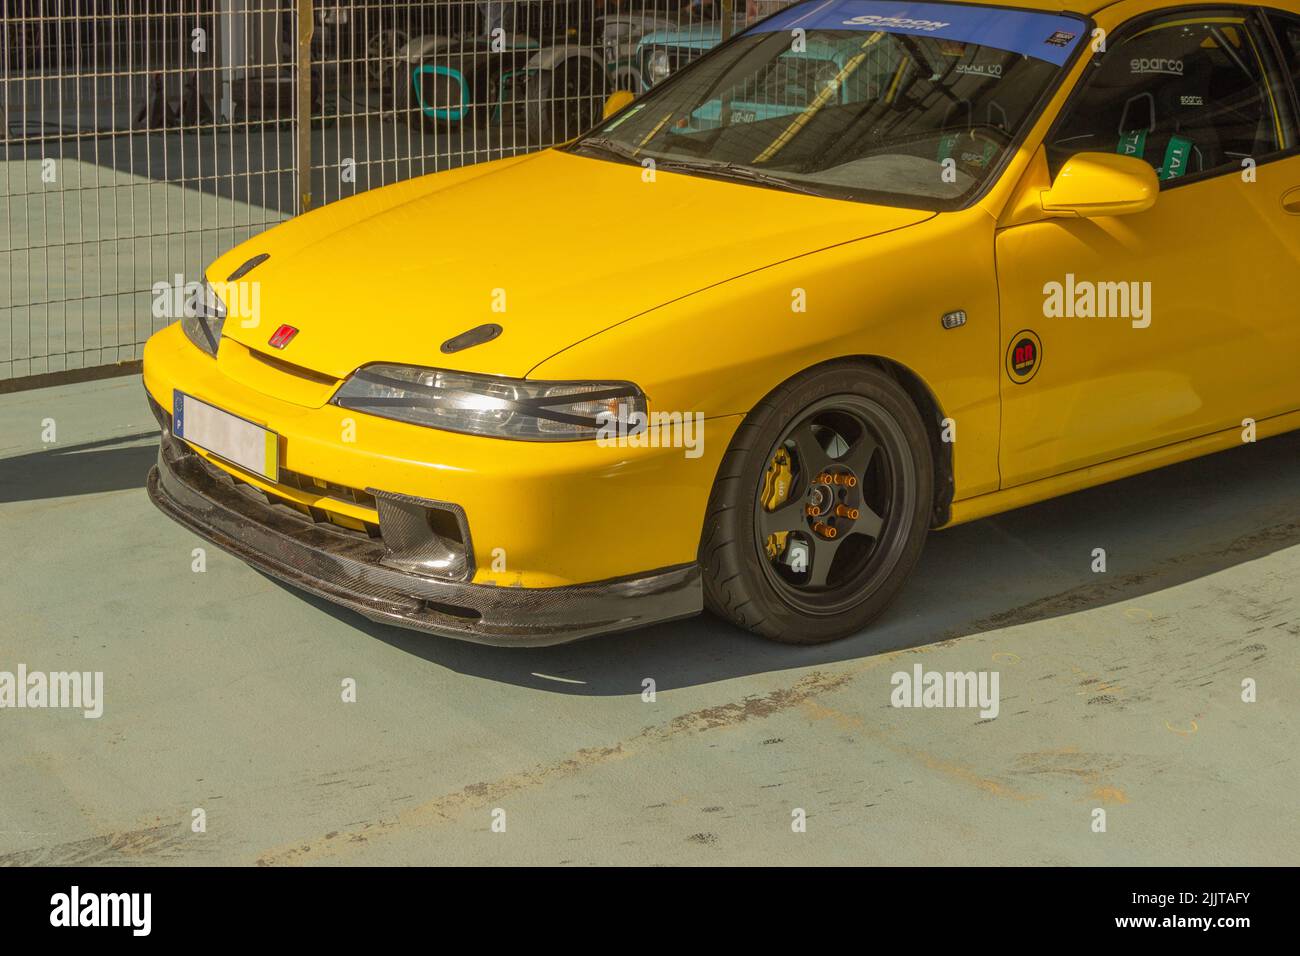 A vibrant yellow Honda Integra Type R sportscar parked outside under bright sunlight Stock Photo